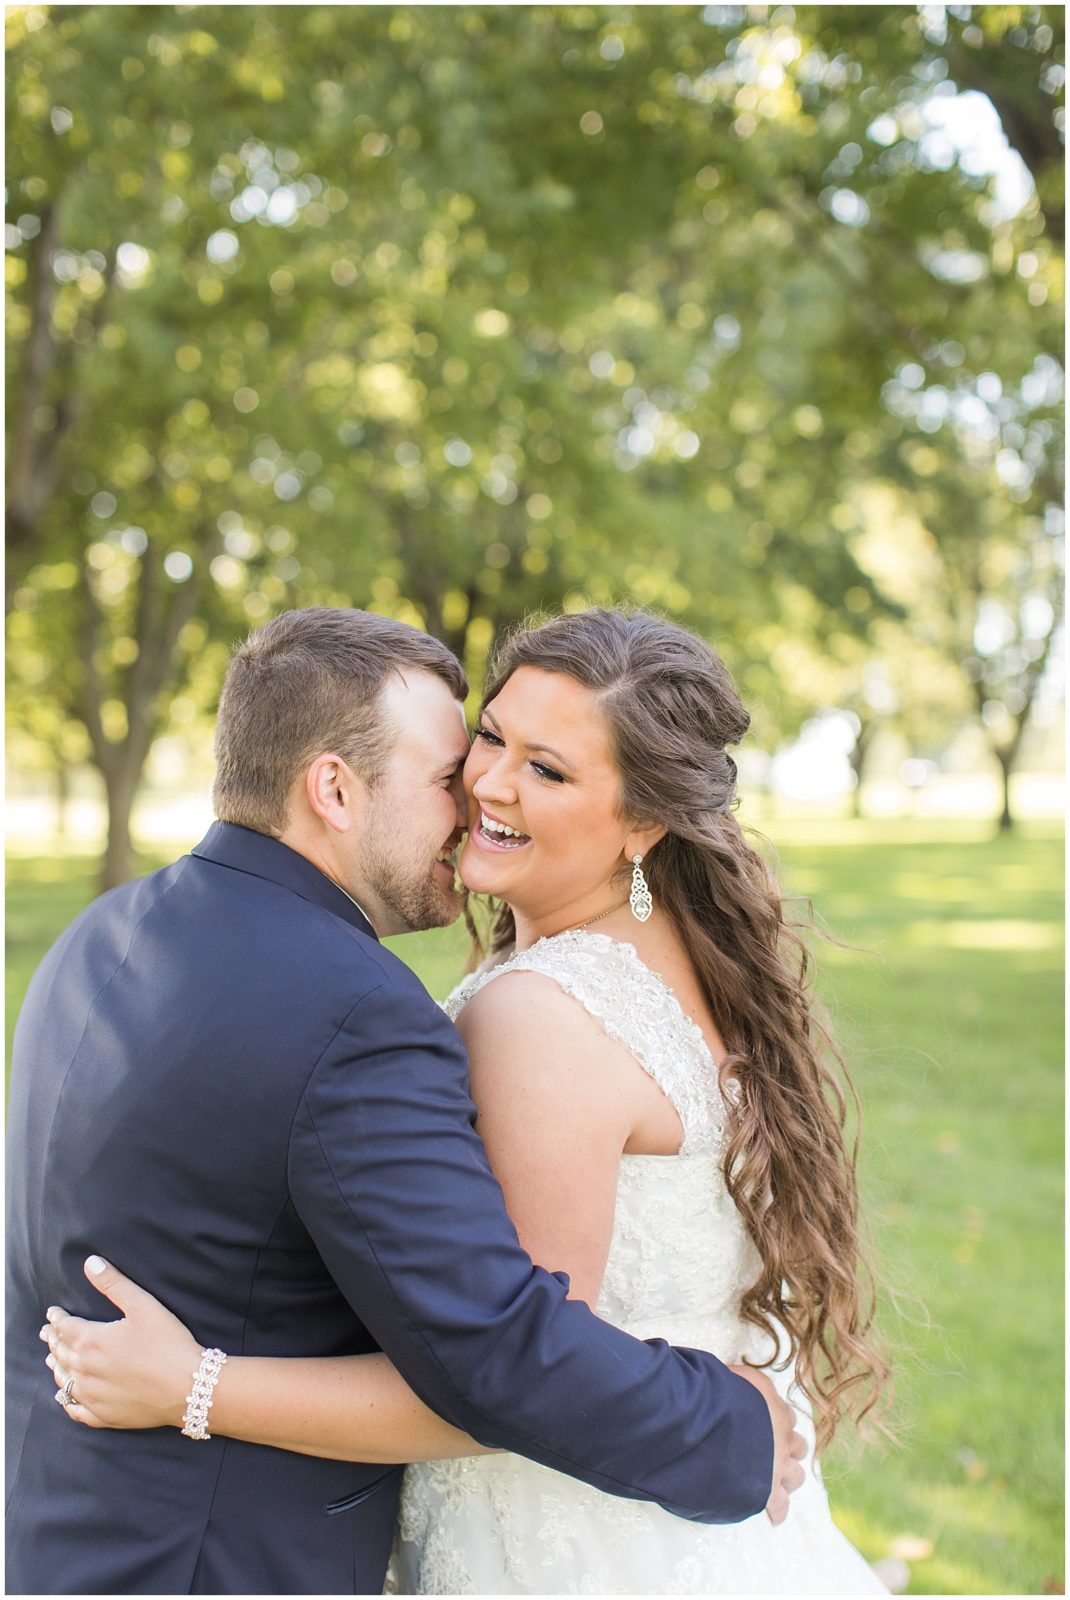 Sunset Portraits | Wedding in Remsen, Iowa shot by Jessica Brees Photography | Remsen Wedding Photographer